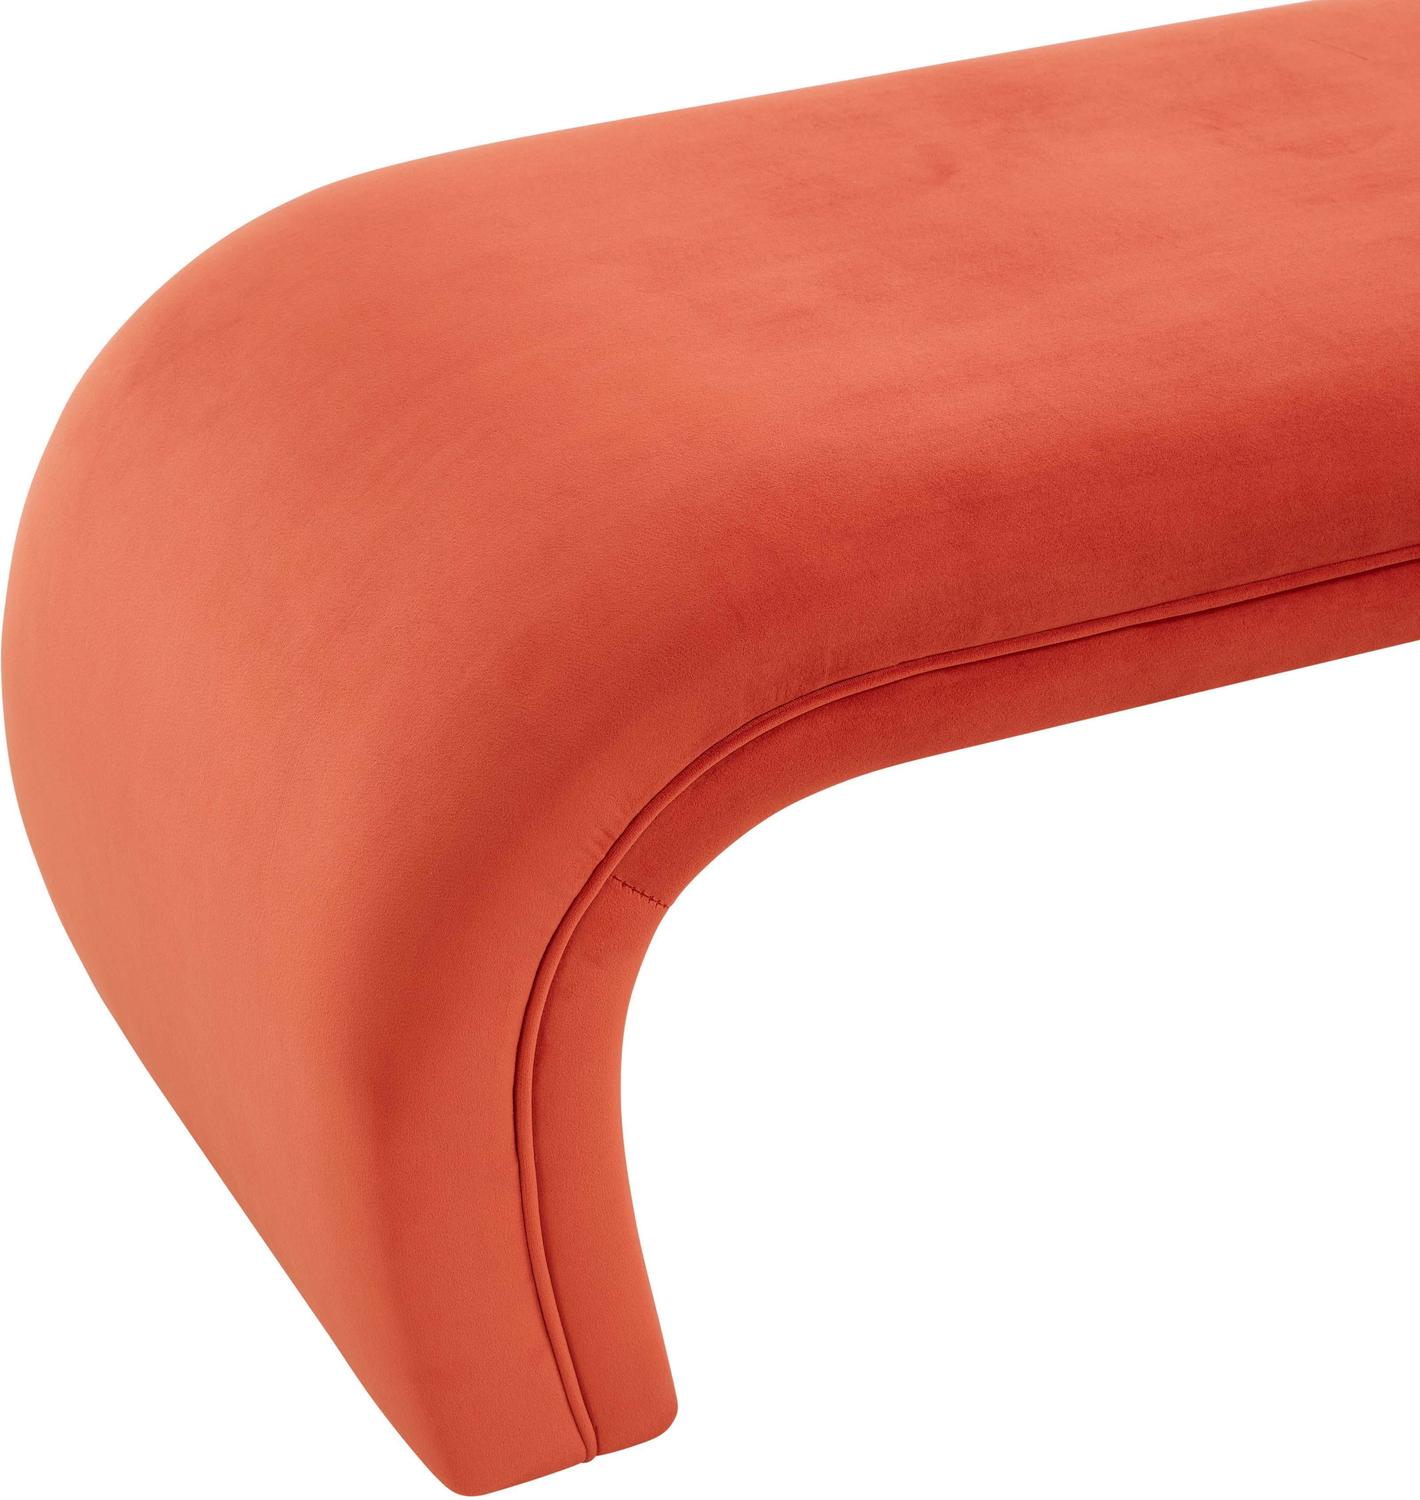 empress ottoman Contemporary Design Furniture Benches Red Rocks